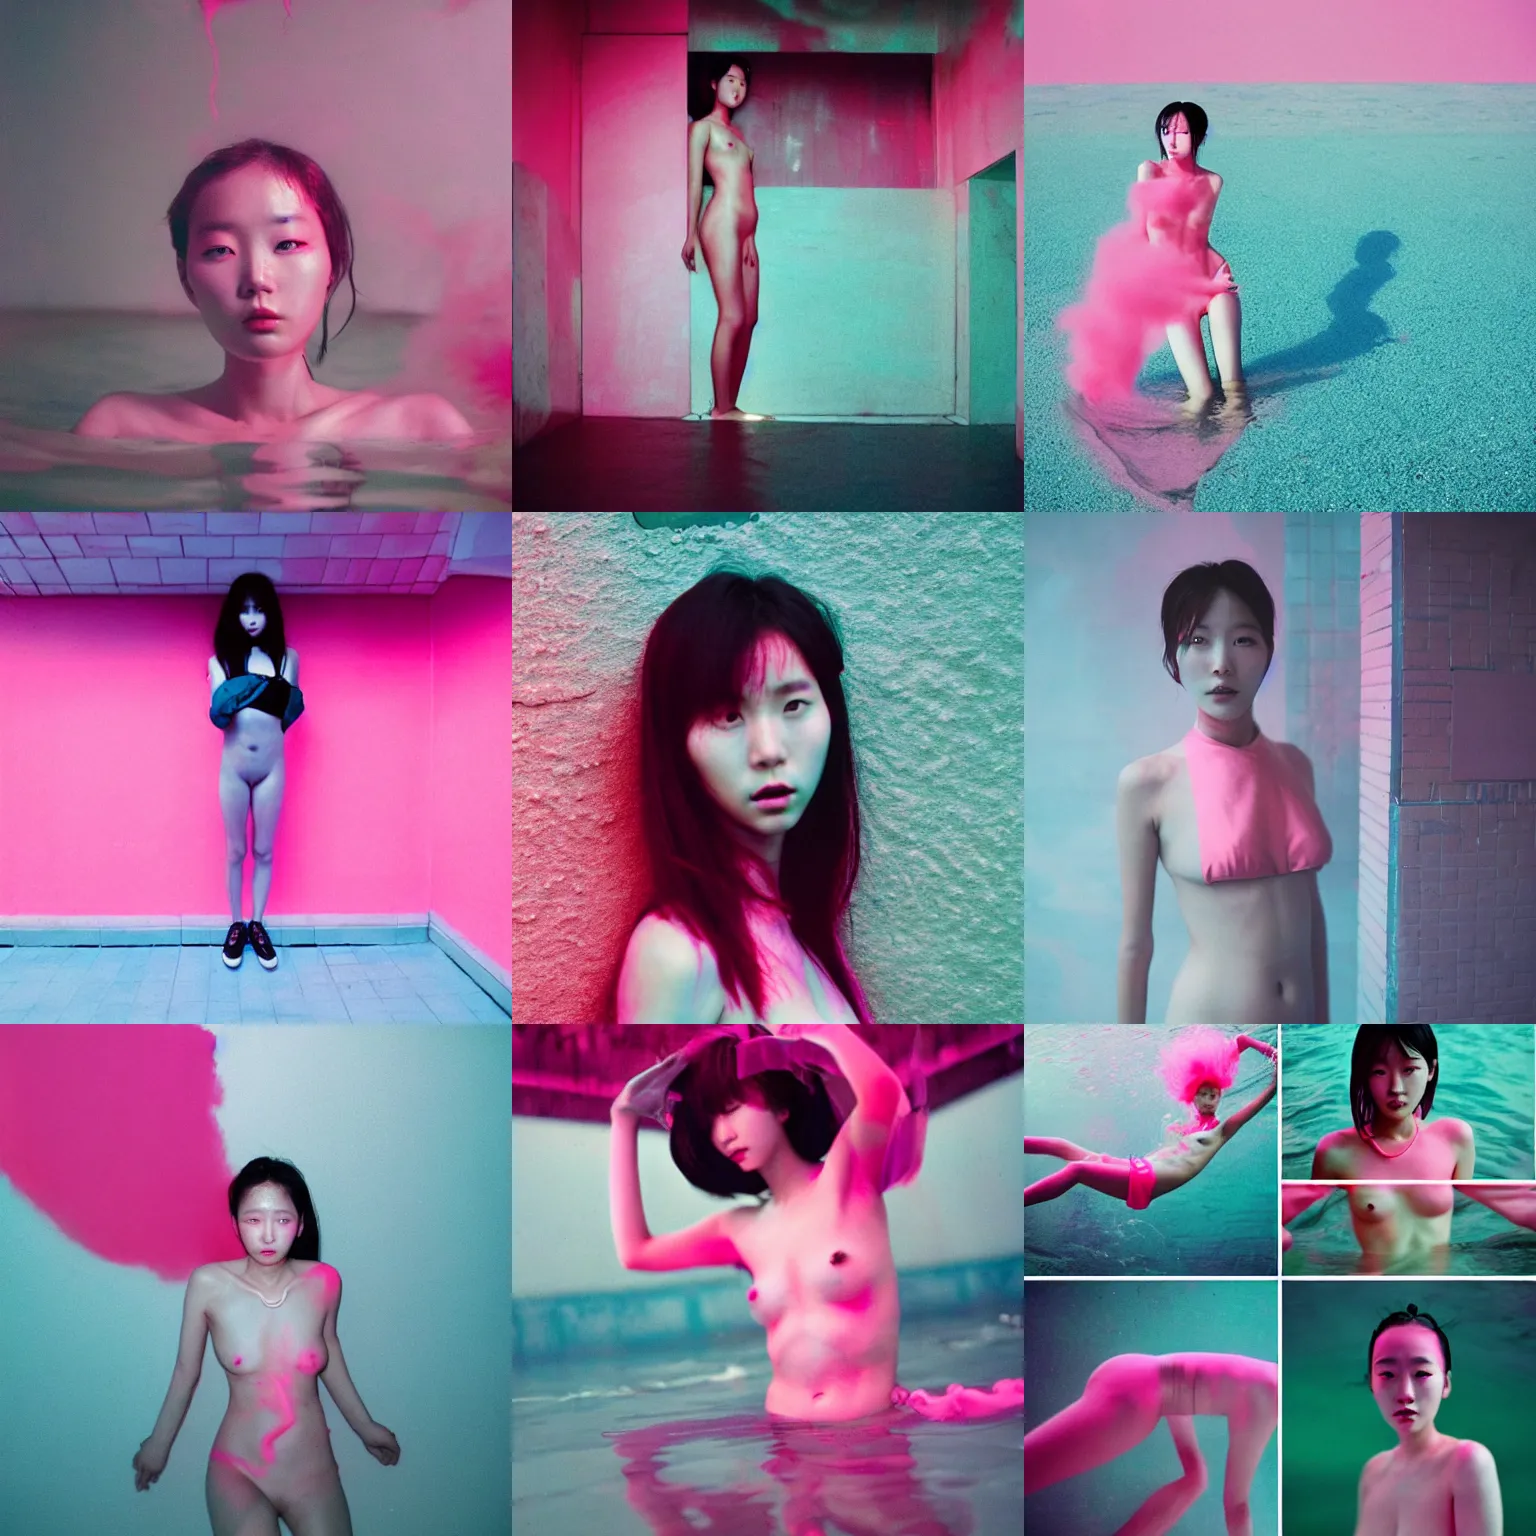 Prompt: lee jin - eun emerging from pink water in cyberpunk theme ren hang, rule of thirds, seductive look, beautiful